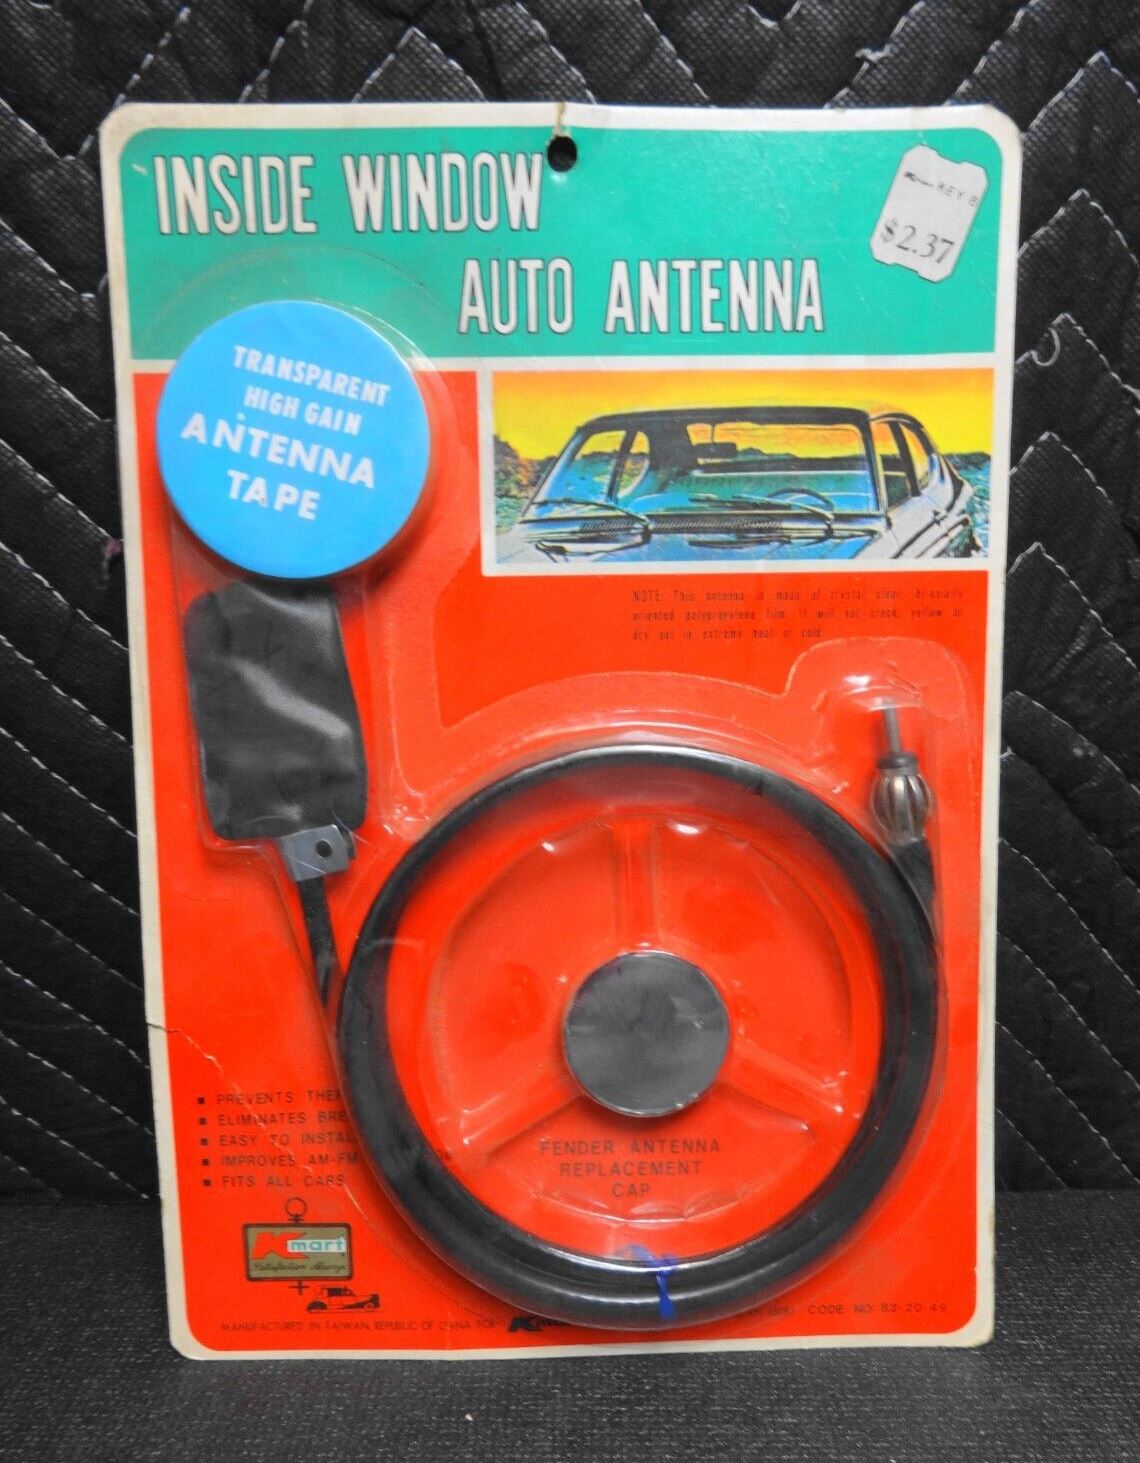 Vintage Inside Window Car Auto Antenna generic Kmart brand